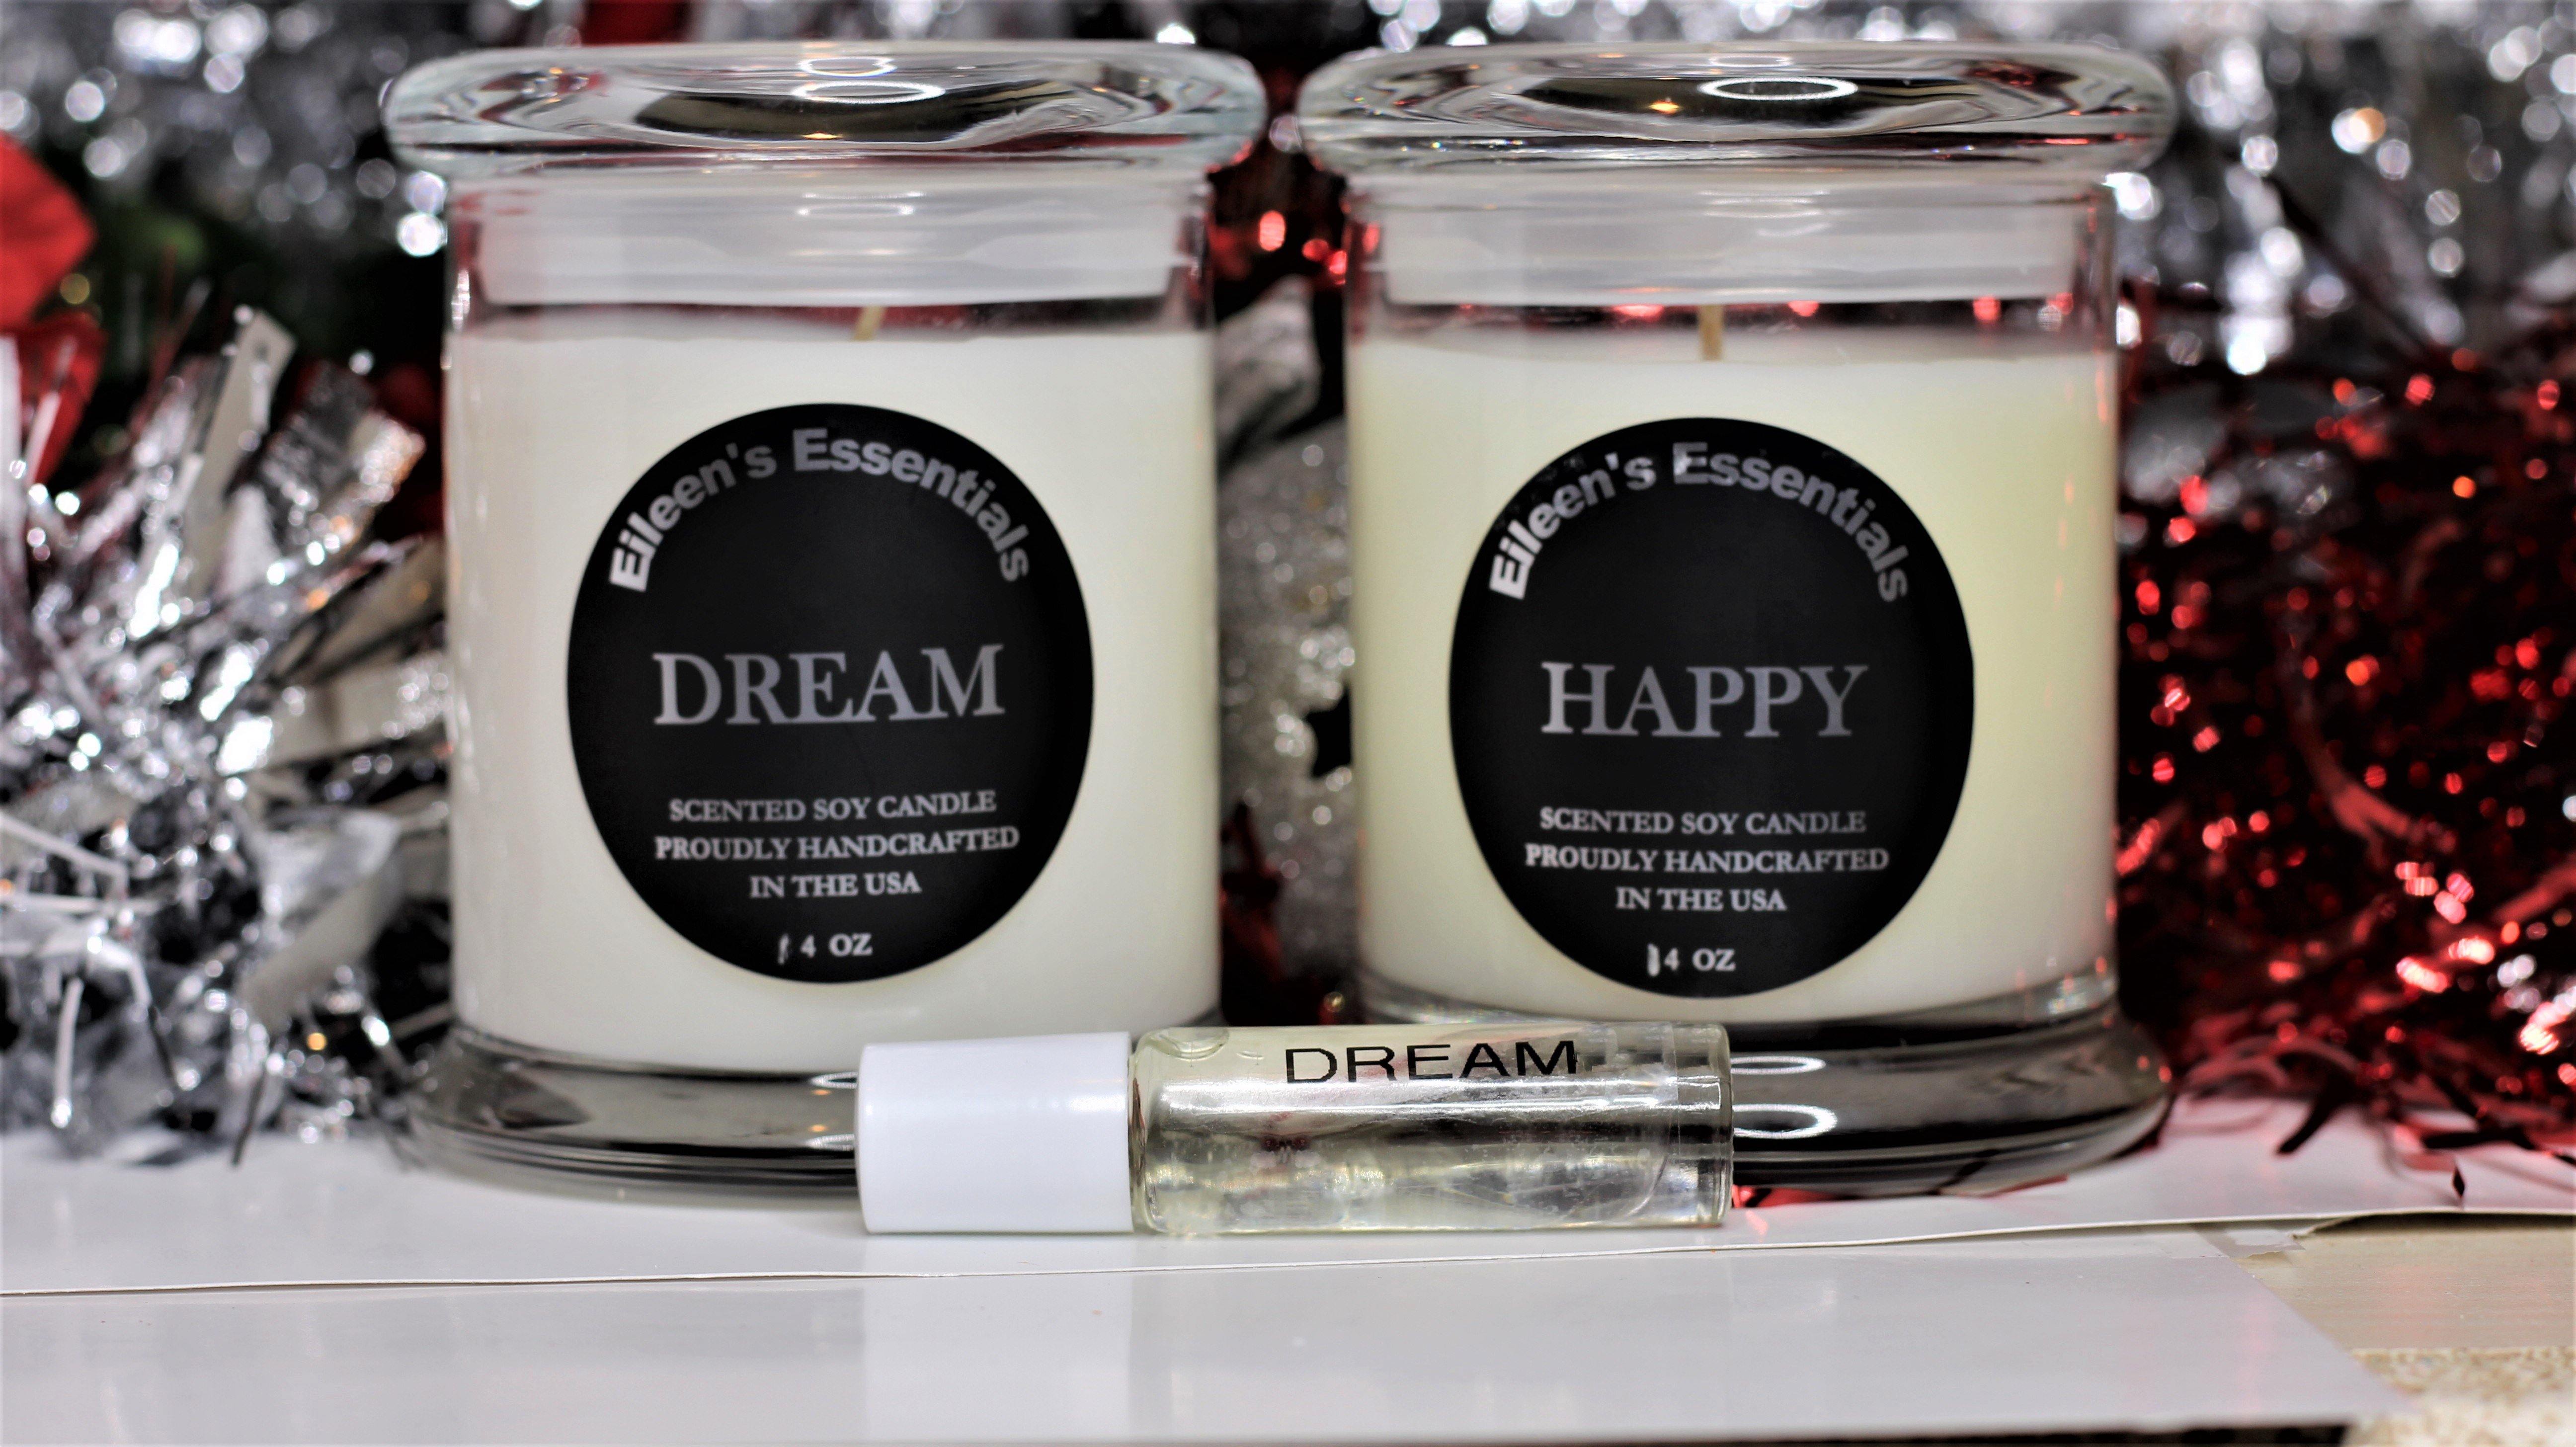 Inspirational Glass Candle; DREAM - Eileen's Essentials